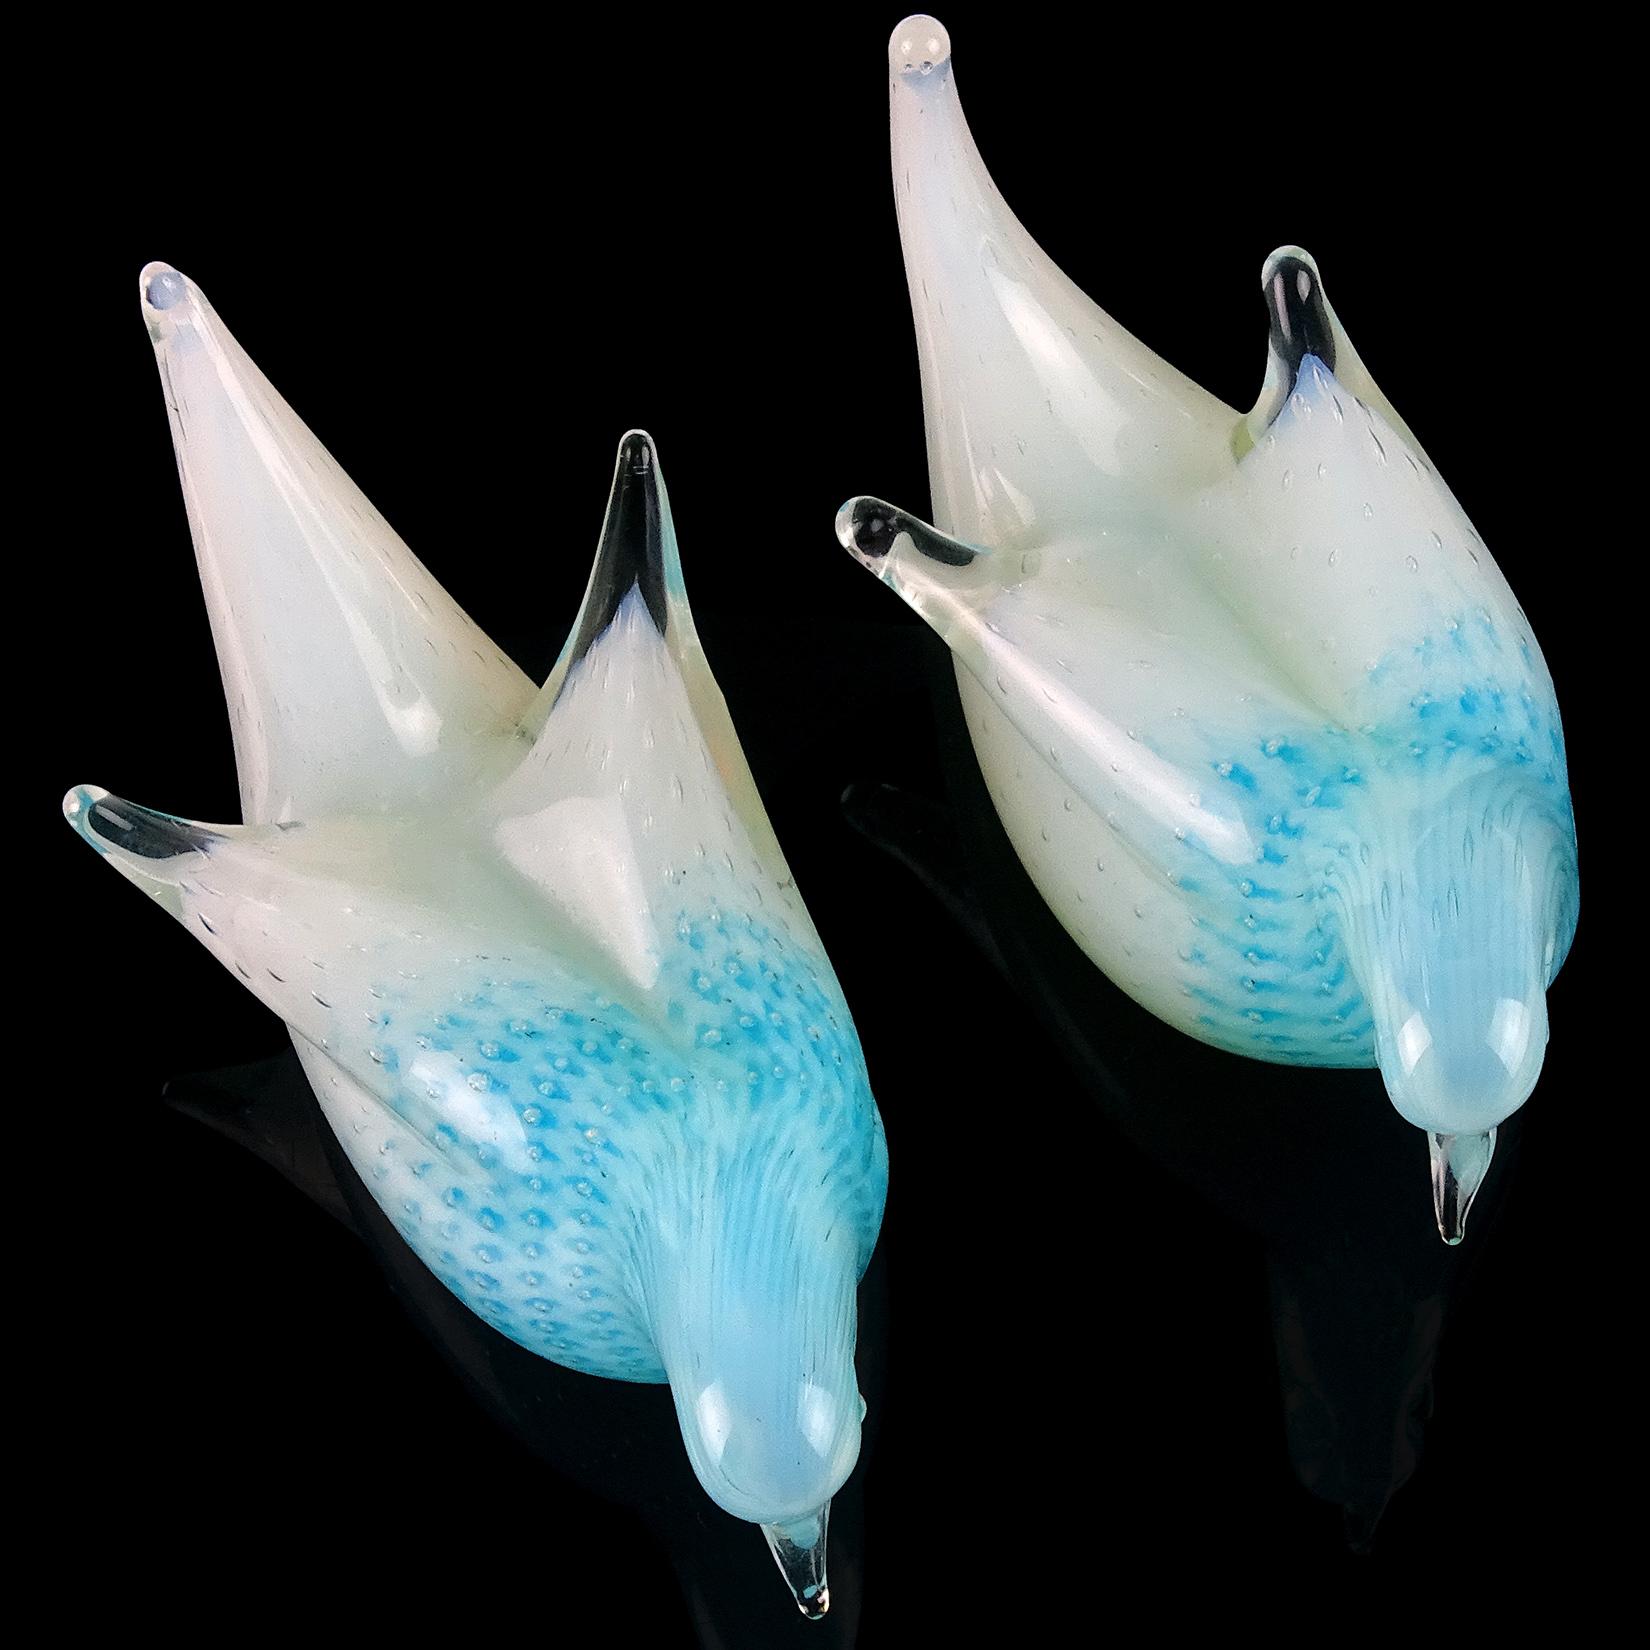 Murano Opalescent White Blue Bubbles Italian Art Glass Dove Bird Figurines In Good Condition For Sale In Kissimmee, FL